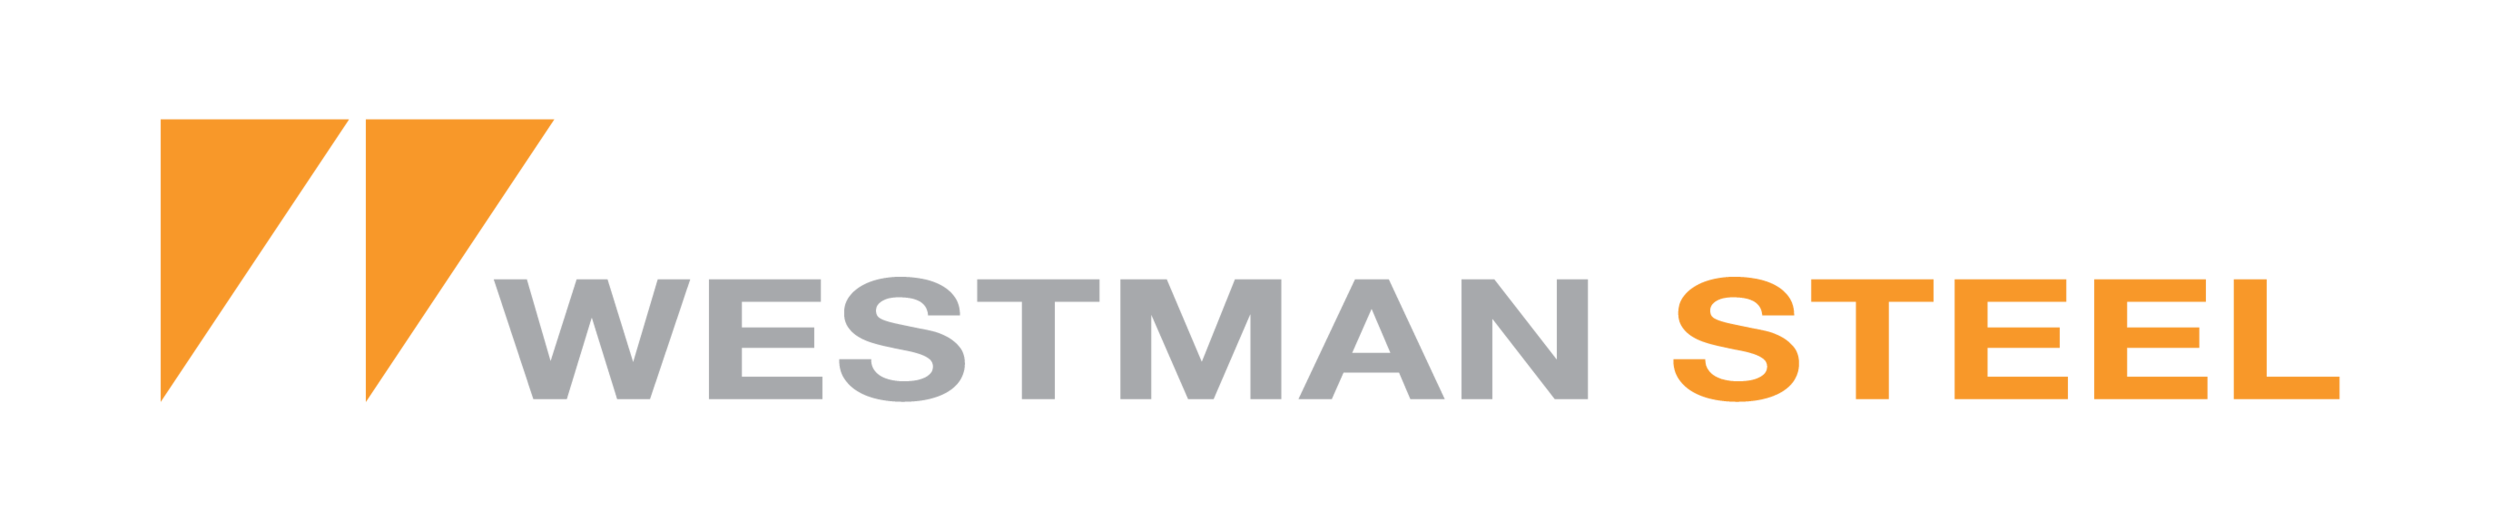 Westman-Steel-Logo-No-Tagline-Orange-Grey-April-2016.png